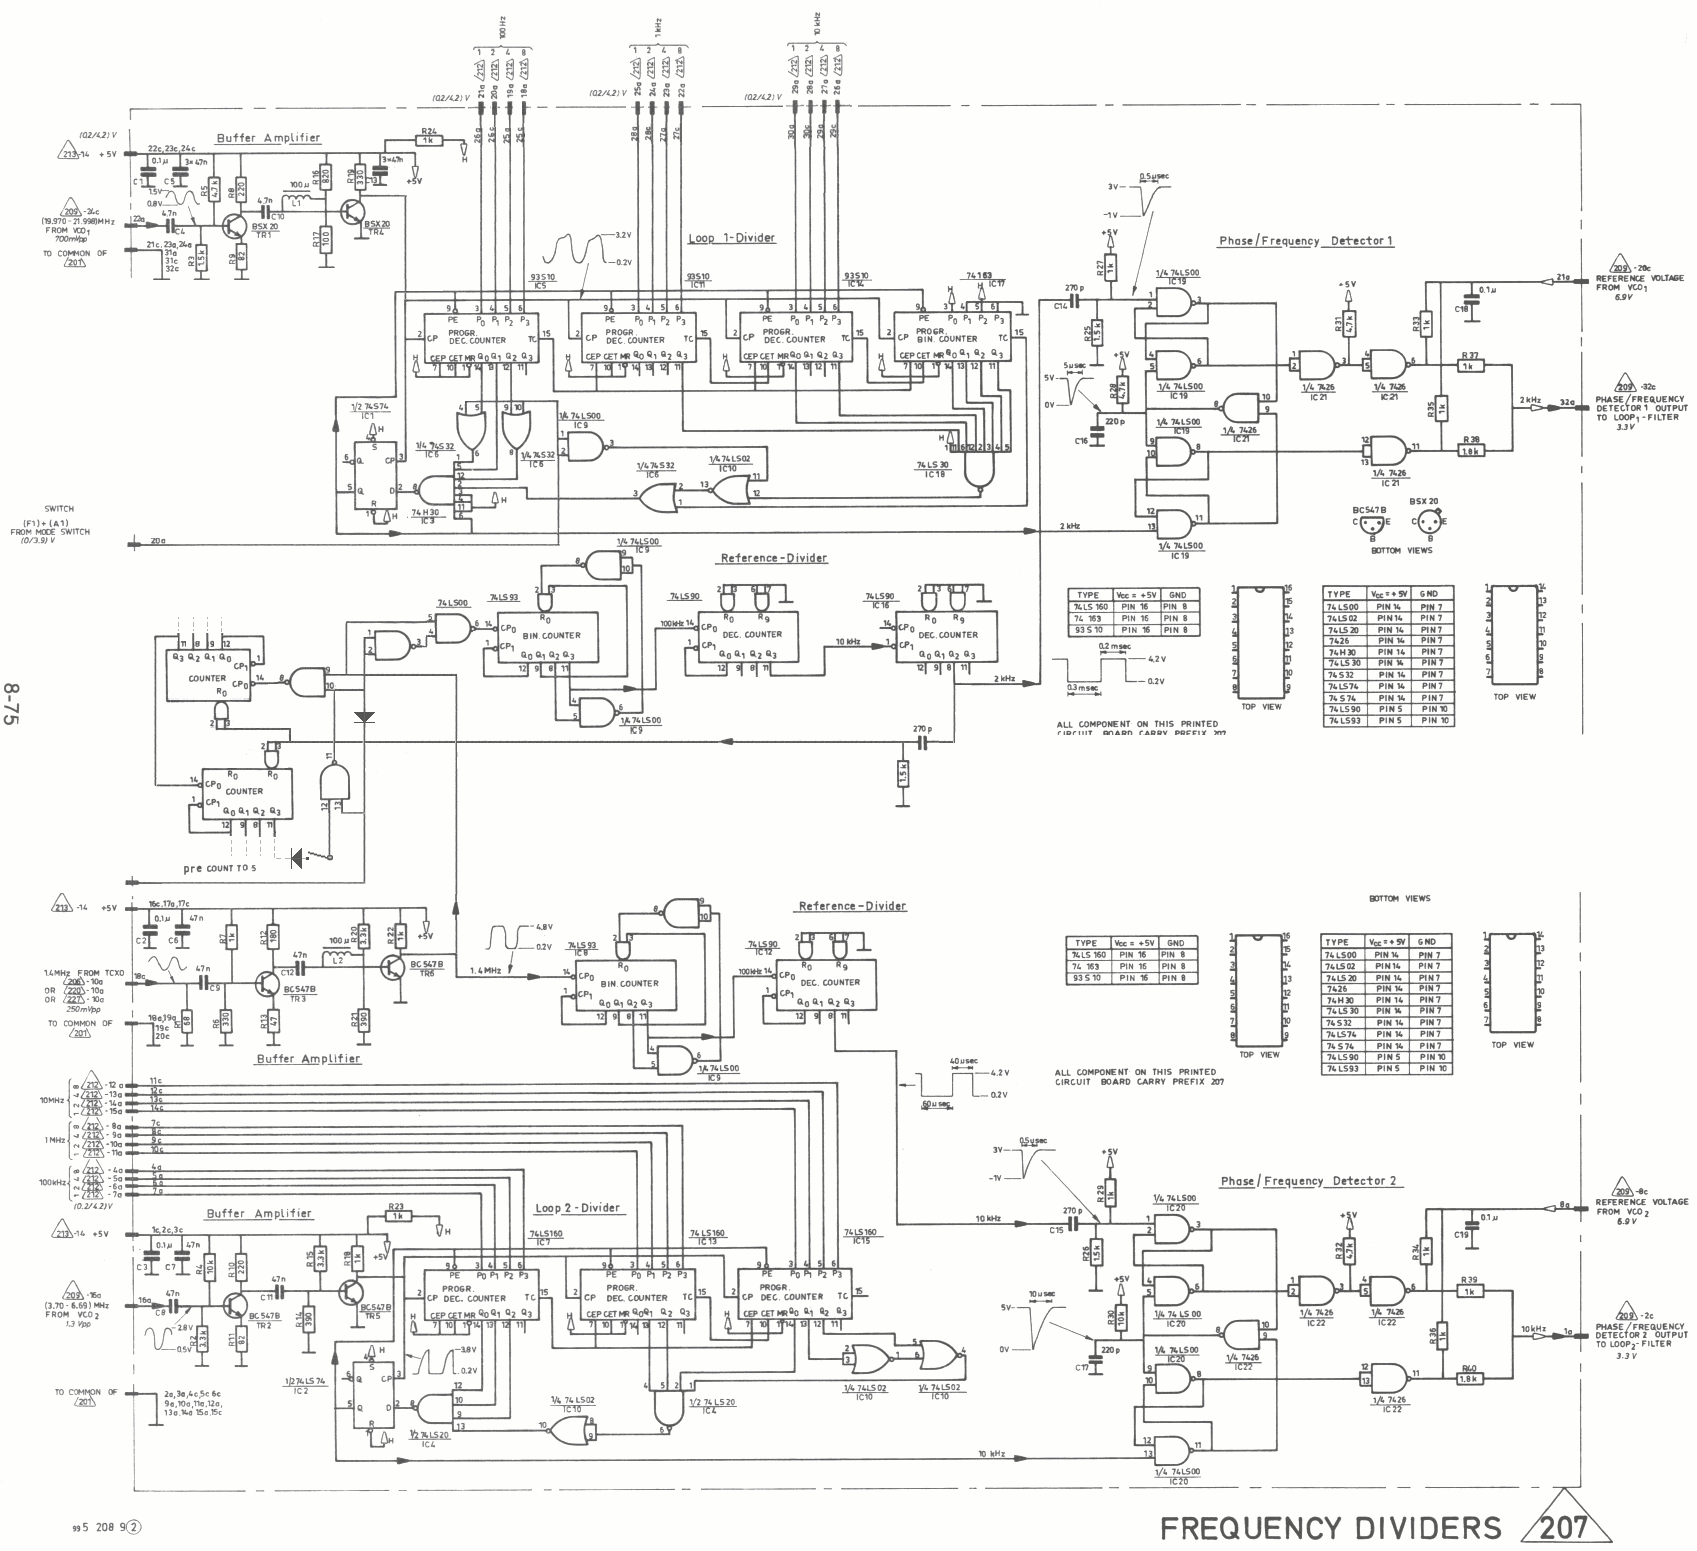 Skanti HF LSB-Frequency Divider diagram 207